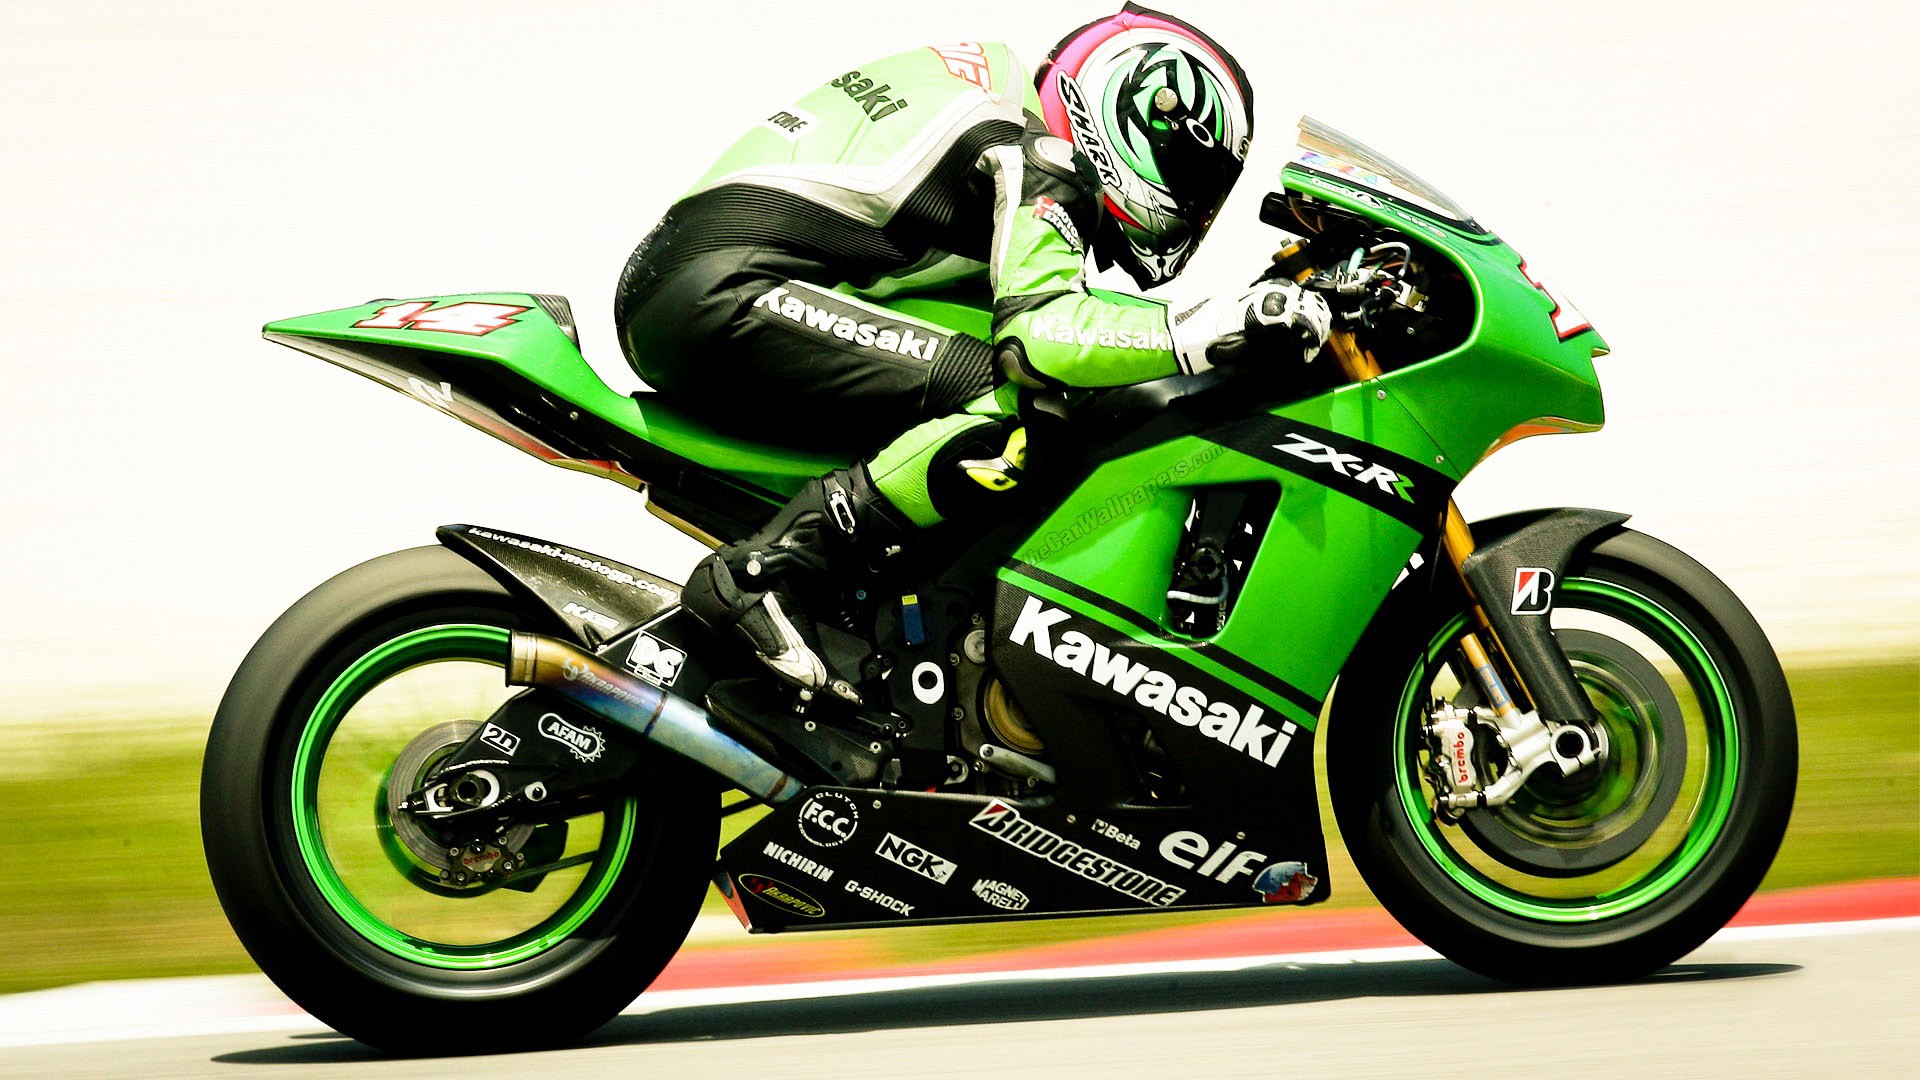 Kawasaki Racing Motogp Wallpaper HD High Resolution